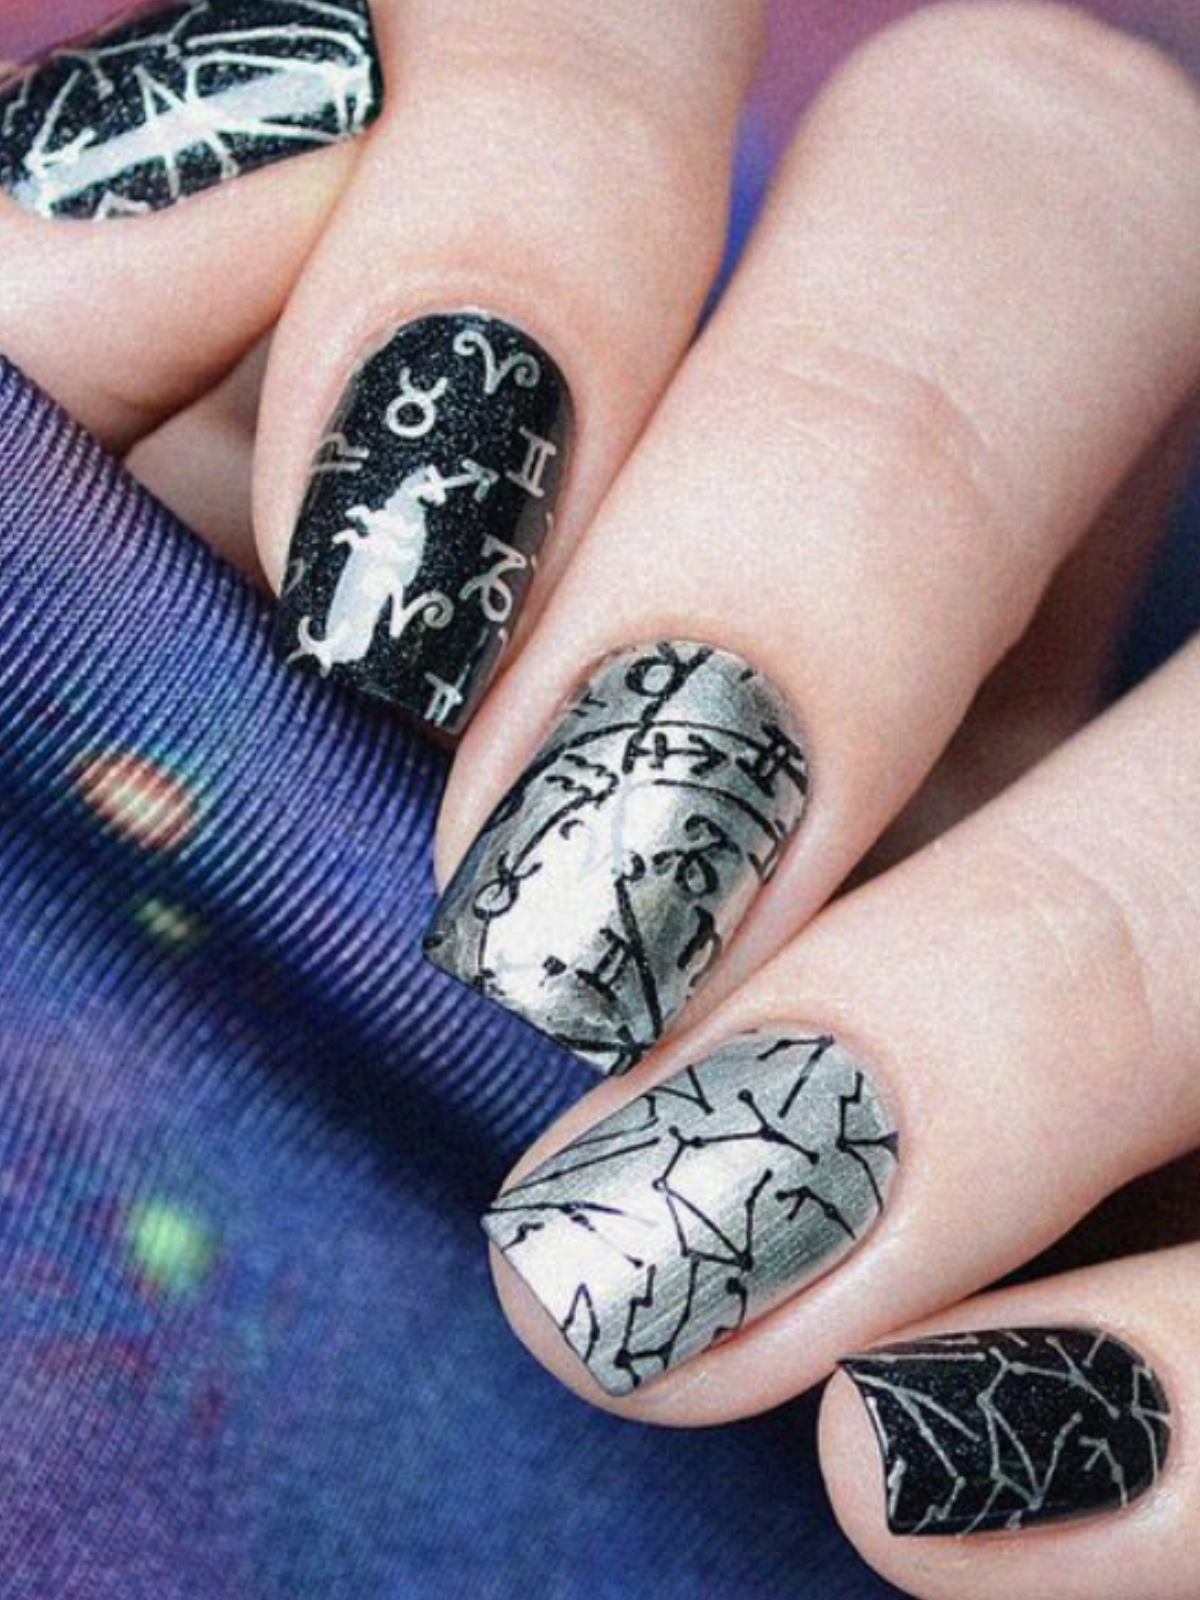 Disney Nails: dream nail art for a princess manicure